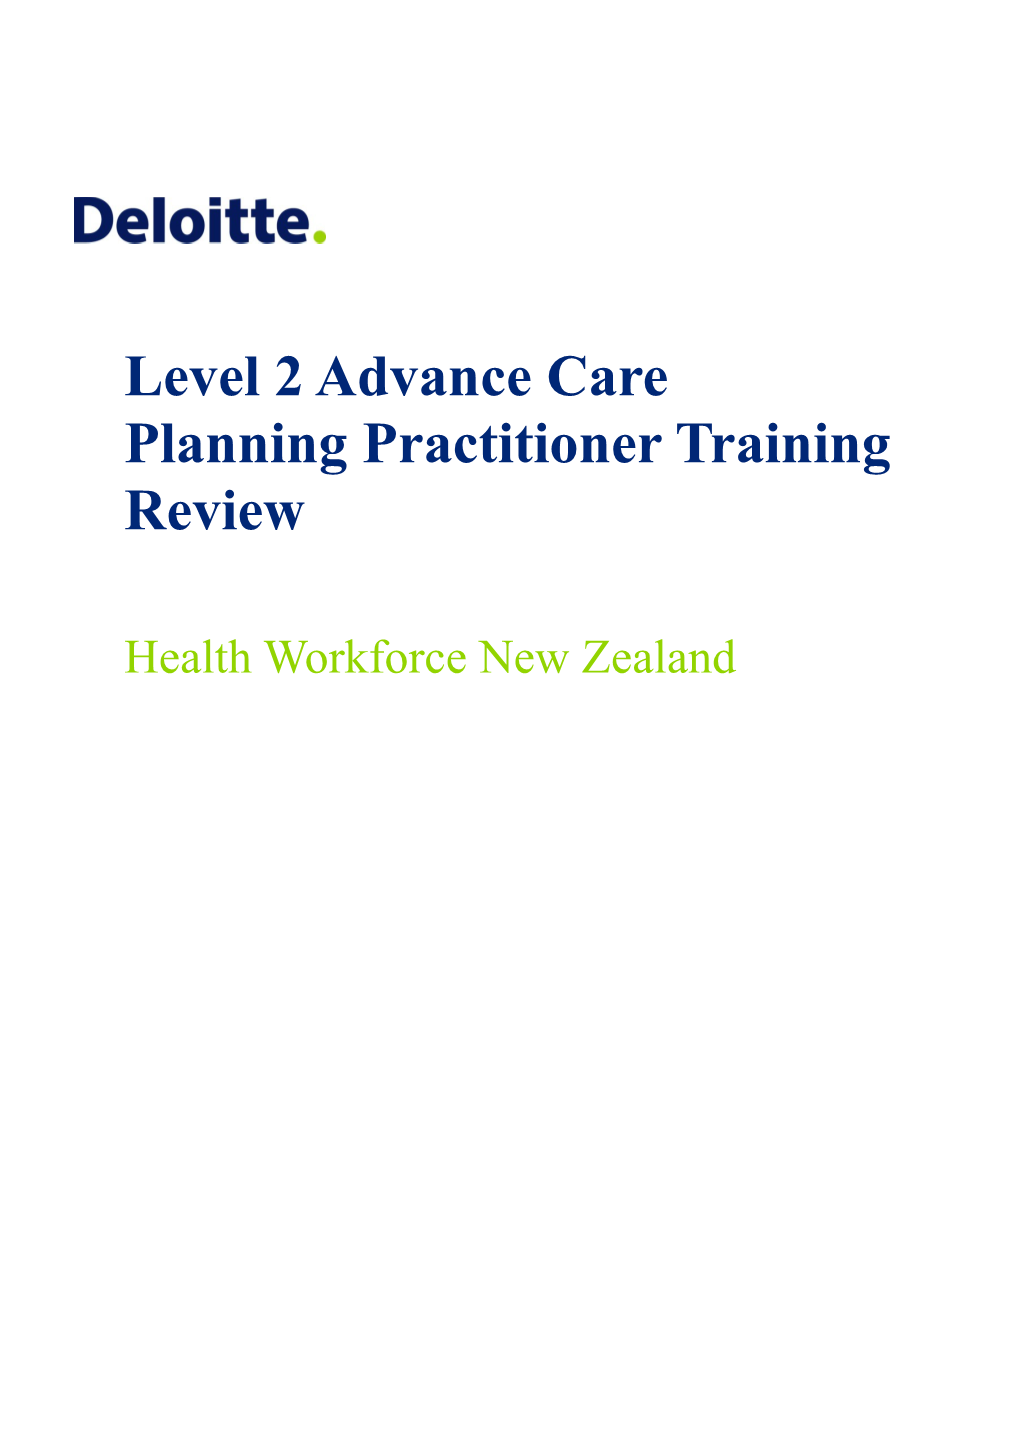 Health Workforce New Zealand